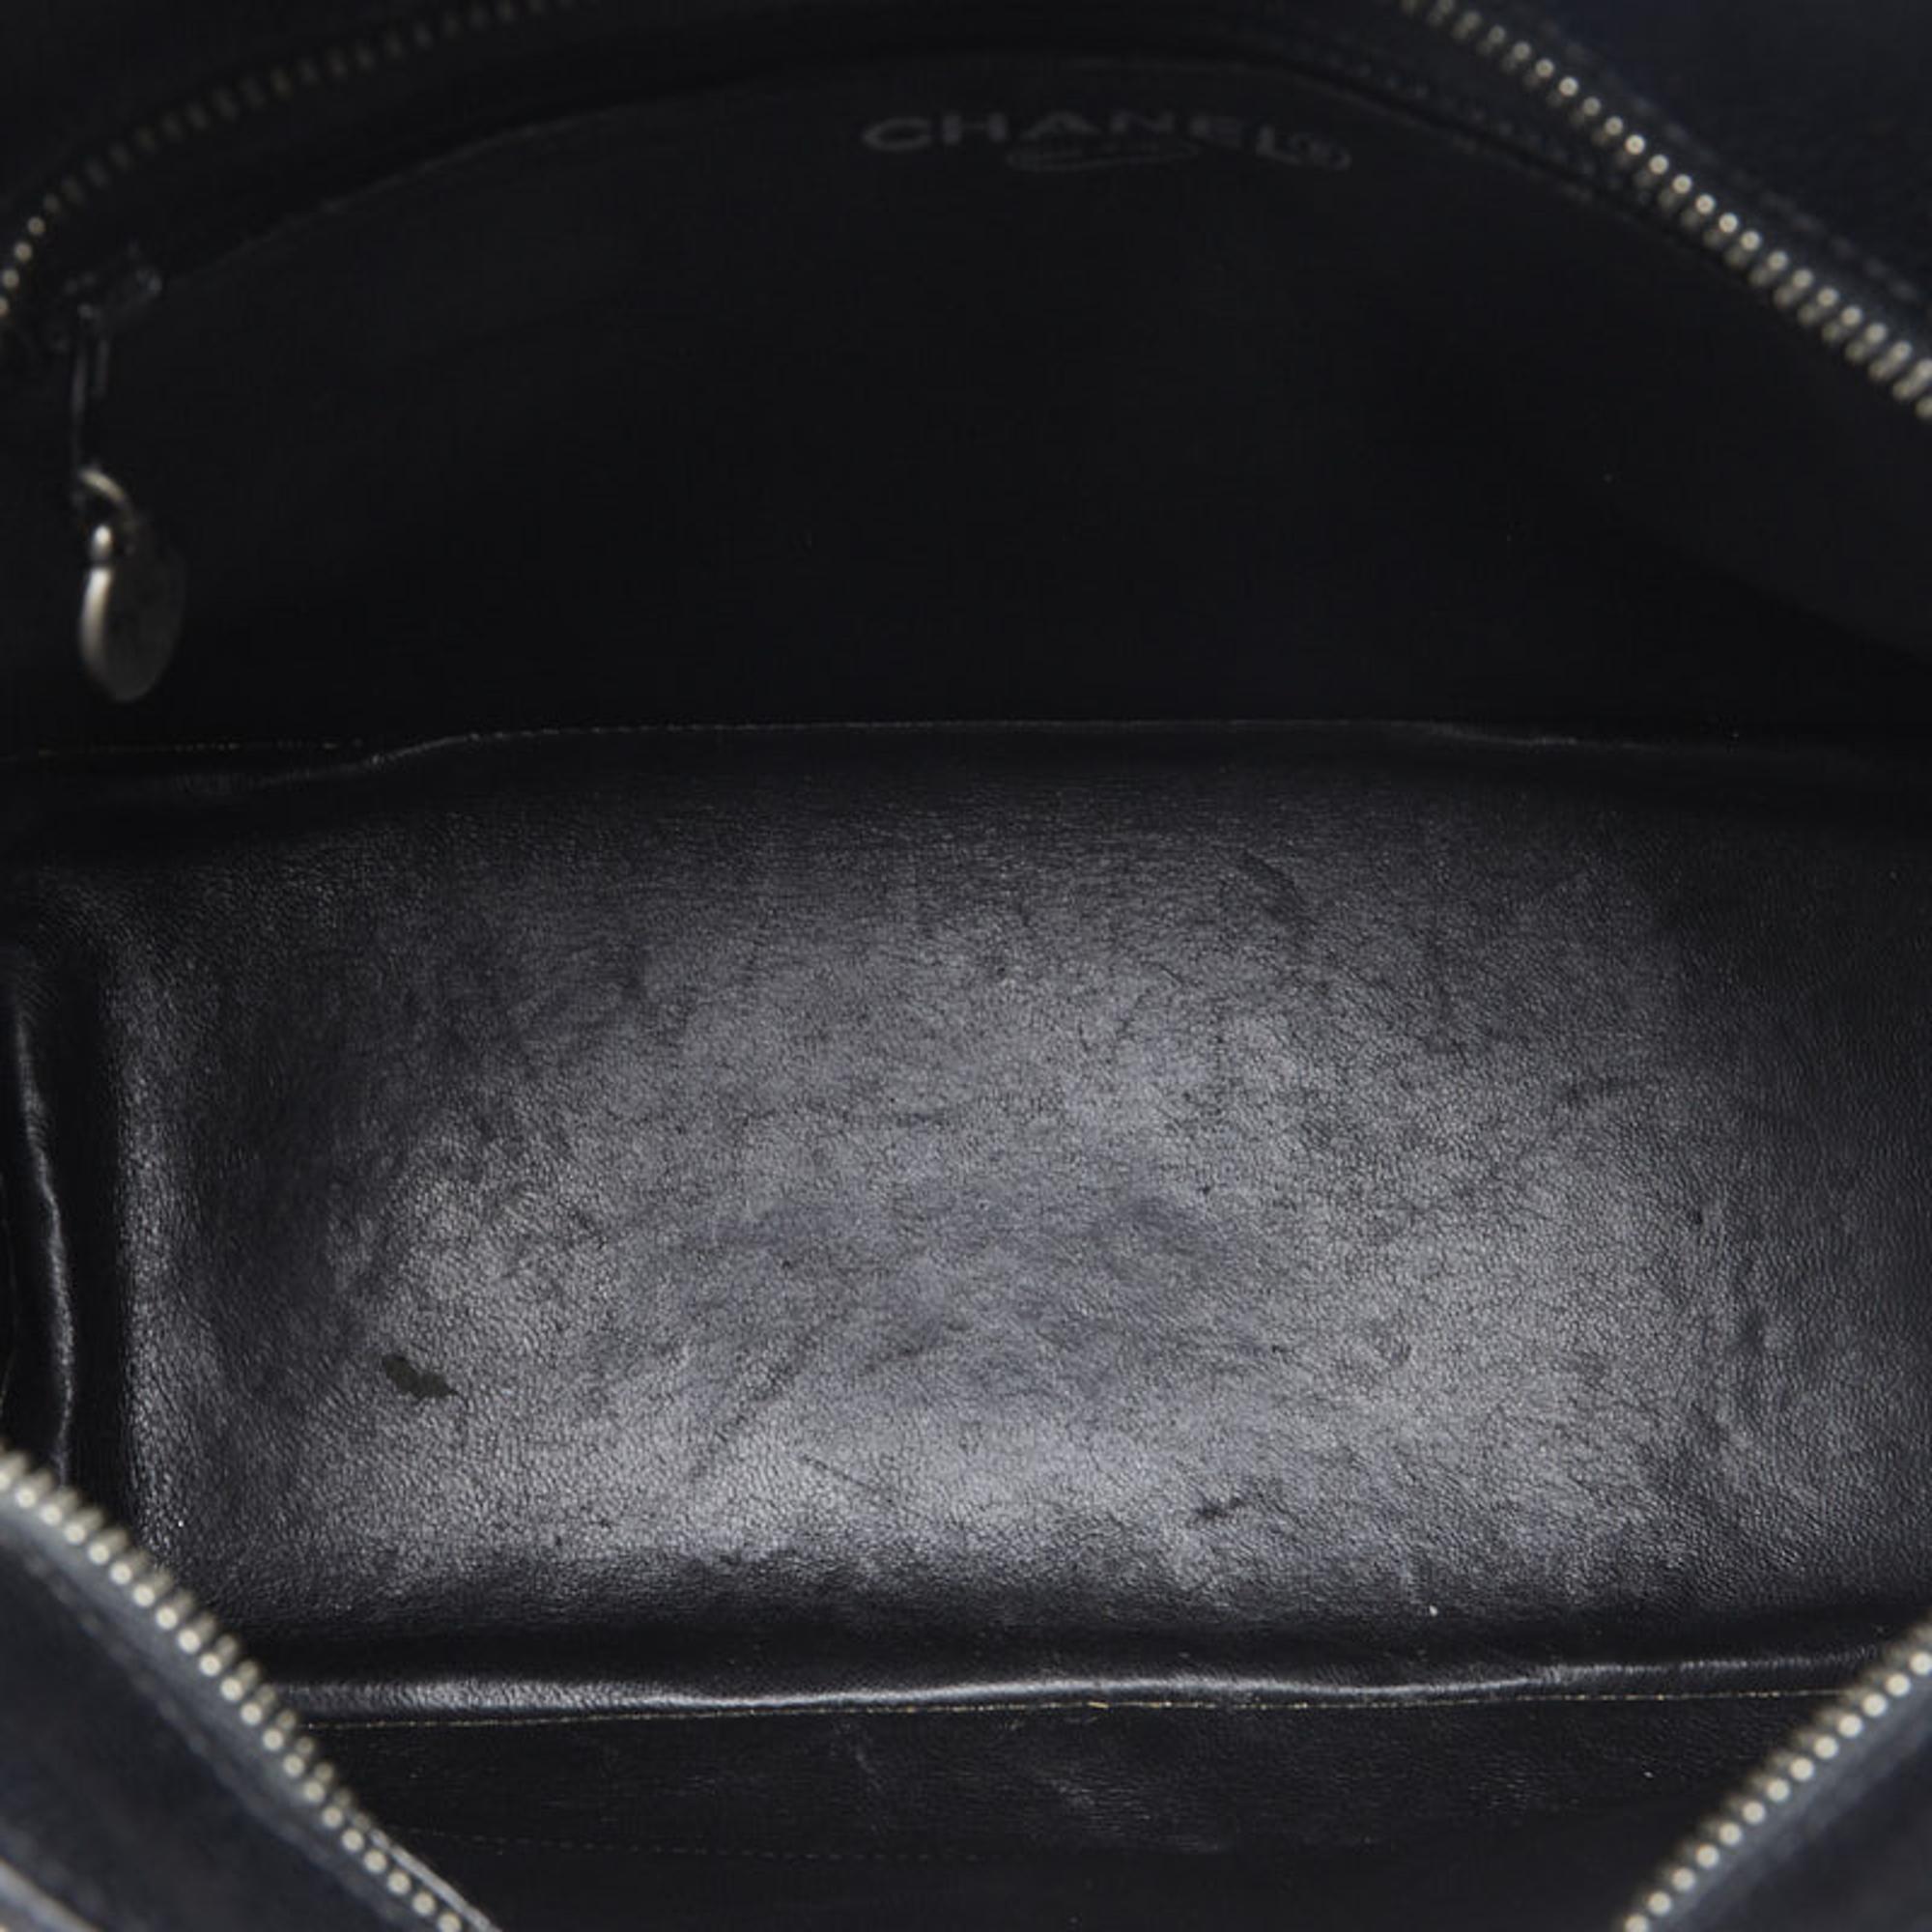 Chanel Black Caviar Leather CC Medallion Tote Bag